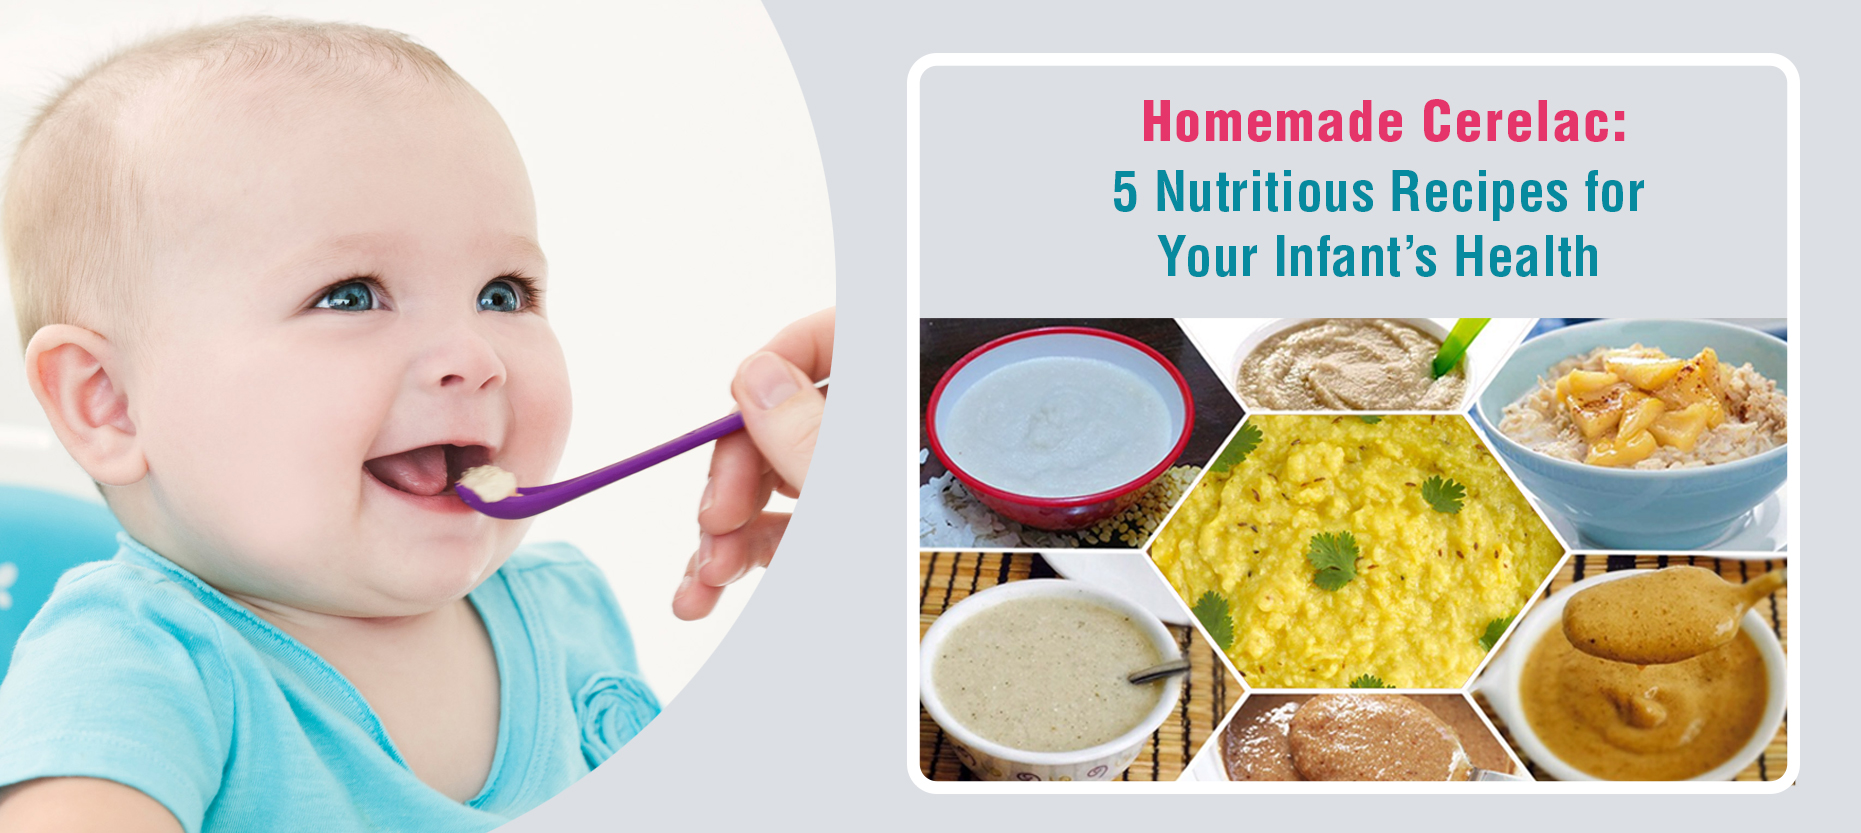 Homemade Cerelac for Infant's Health